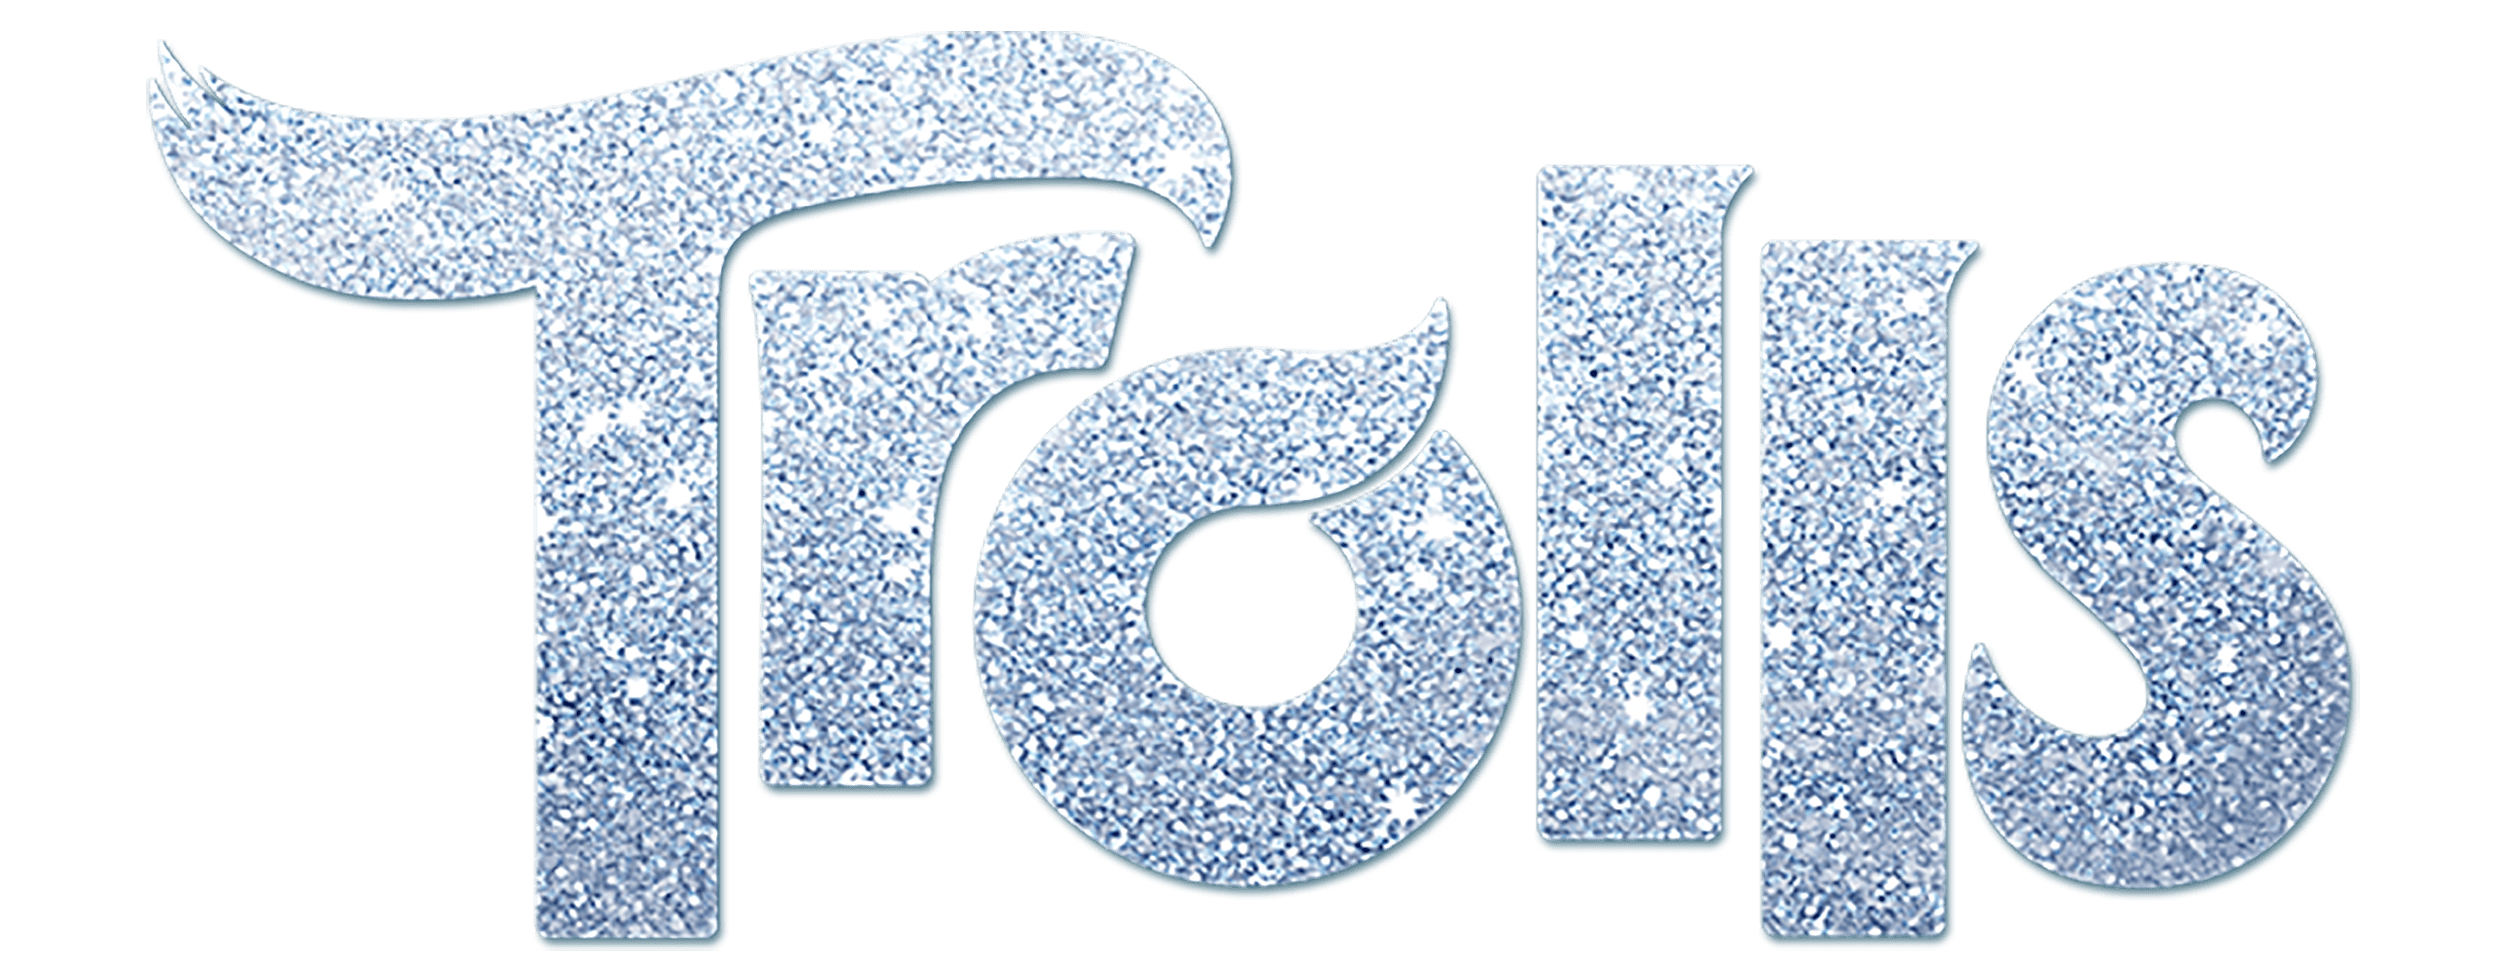 clipart del logo de trolls color plata con brillantina en png sin fondo